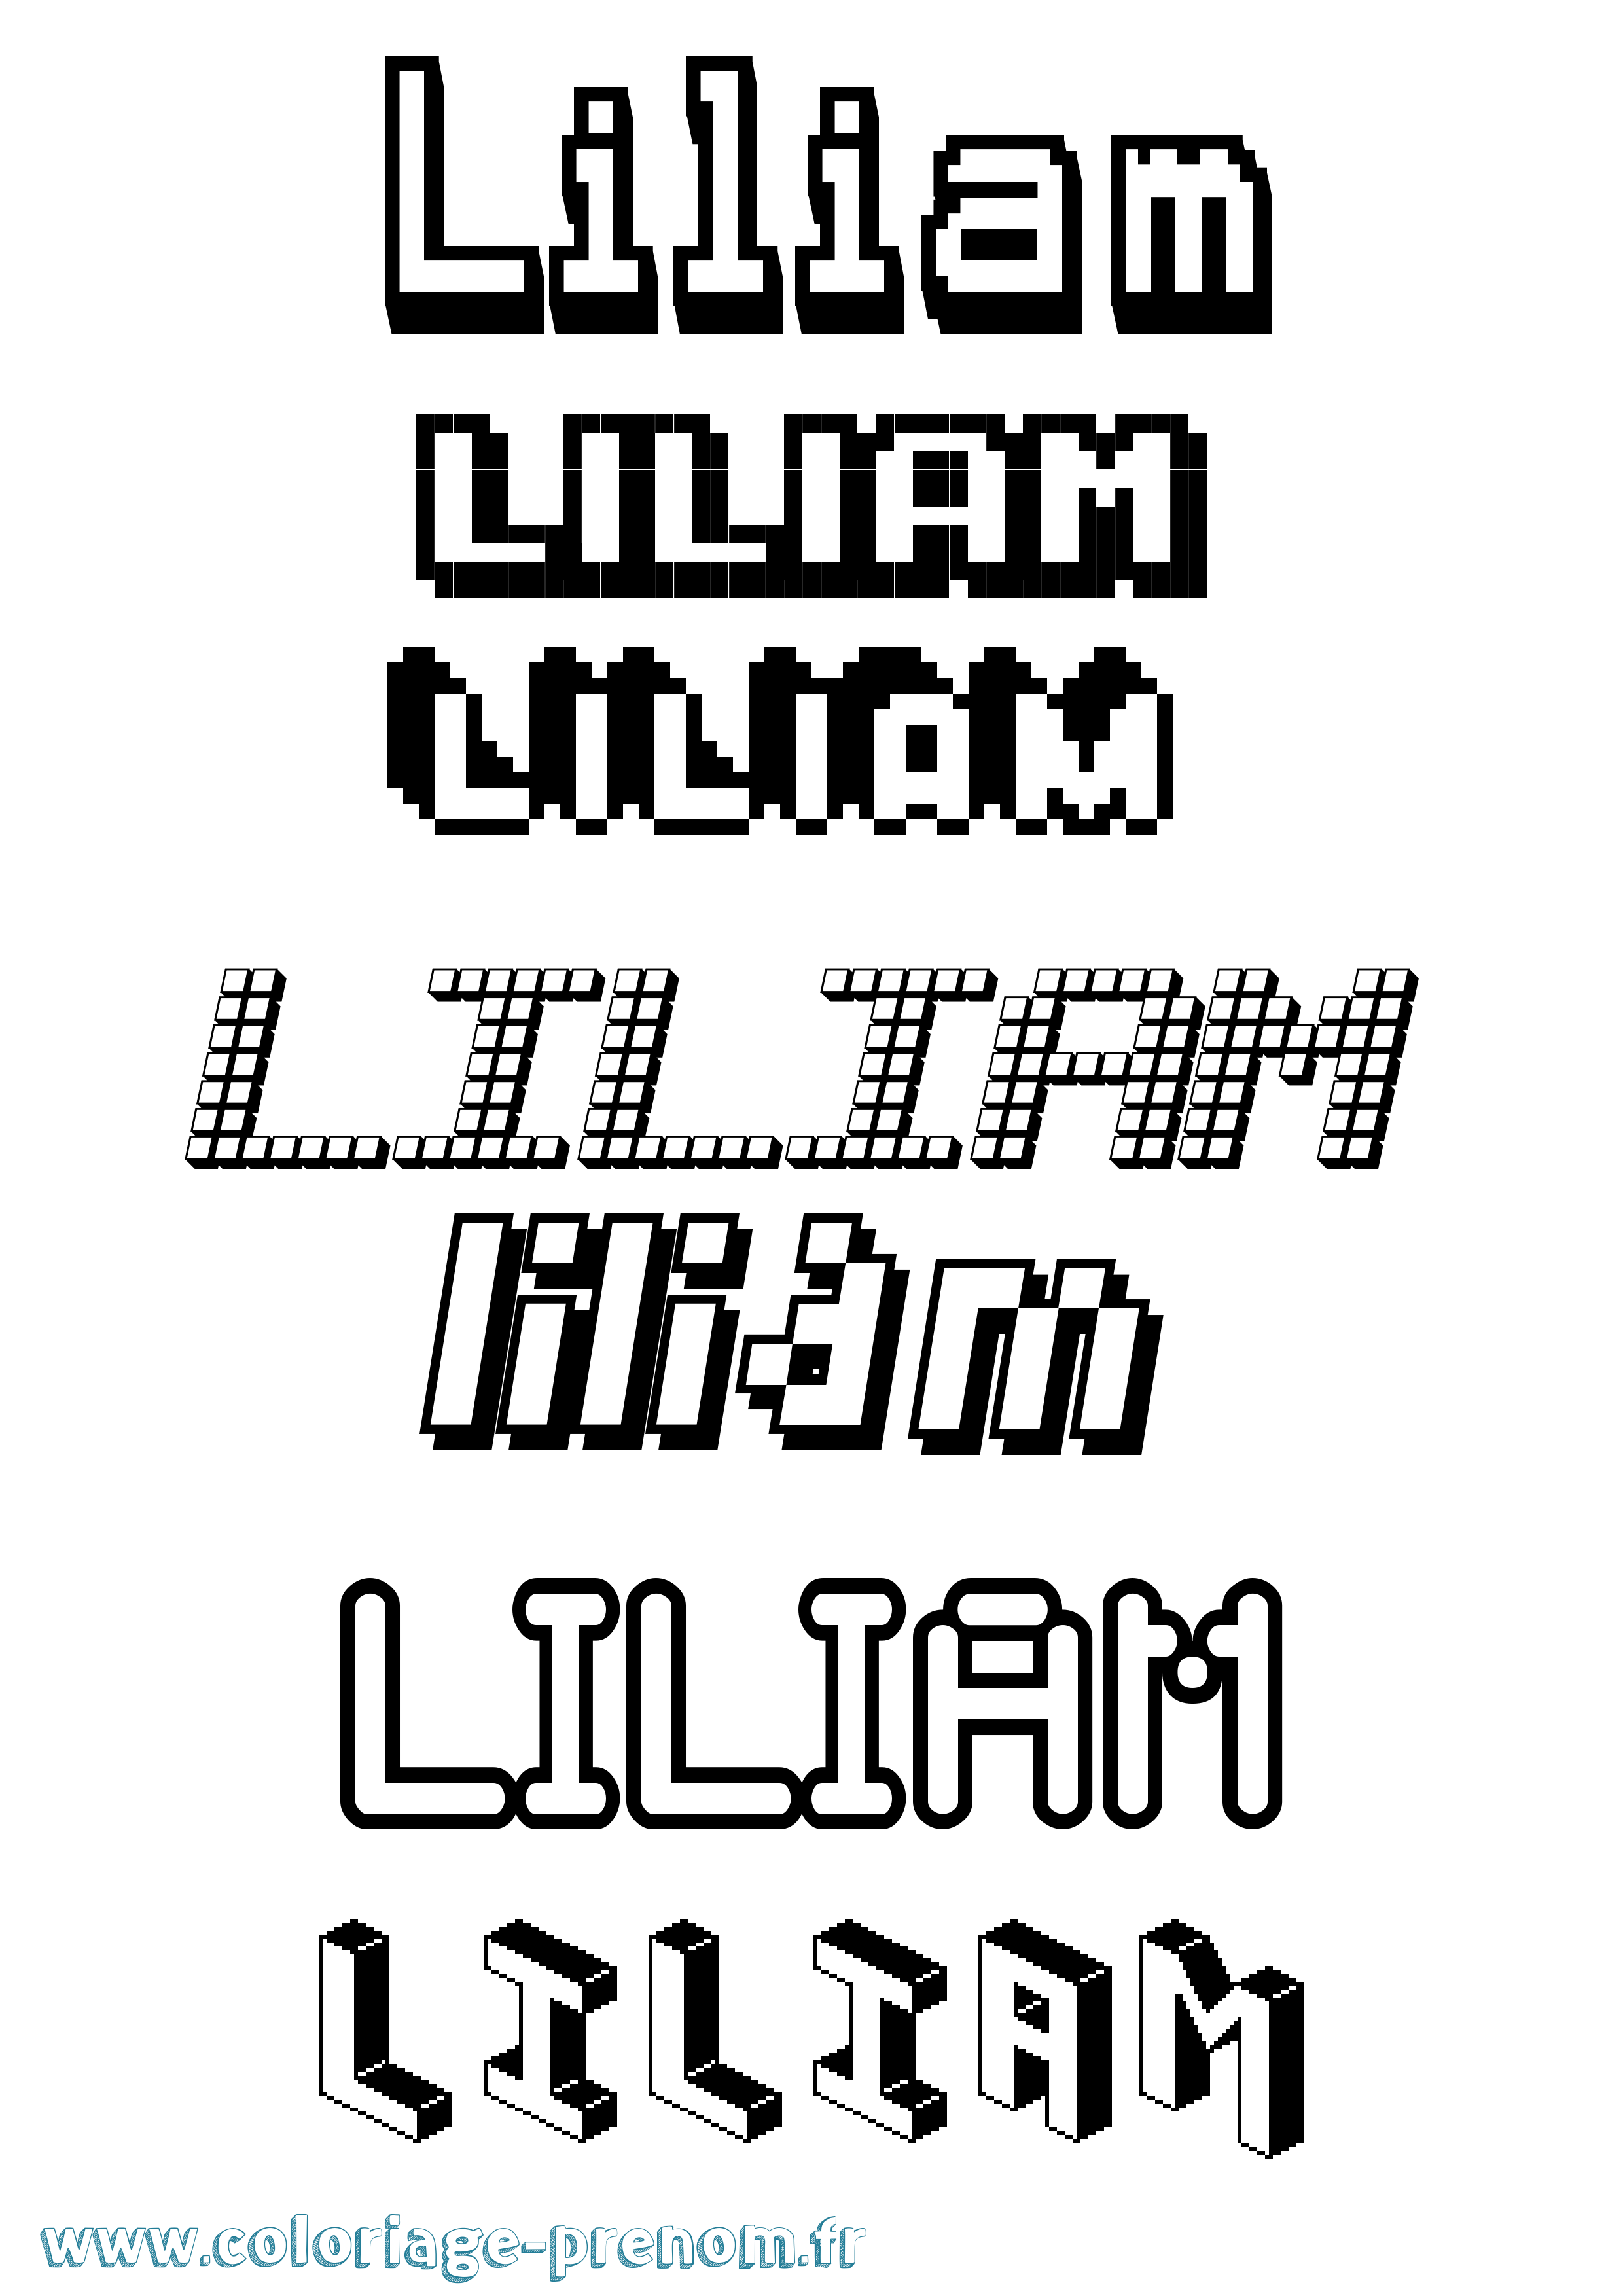 Coloriage prénom Liliam Pixel